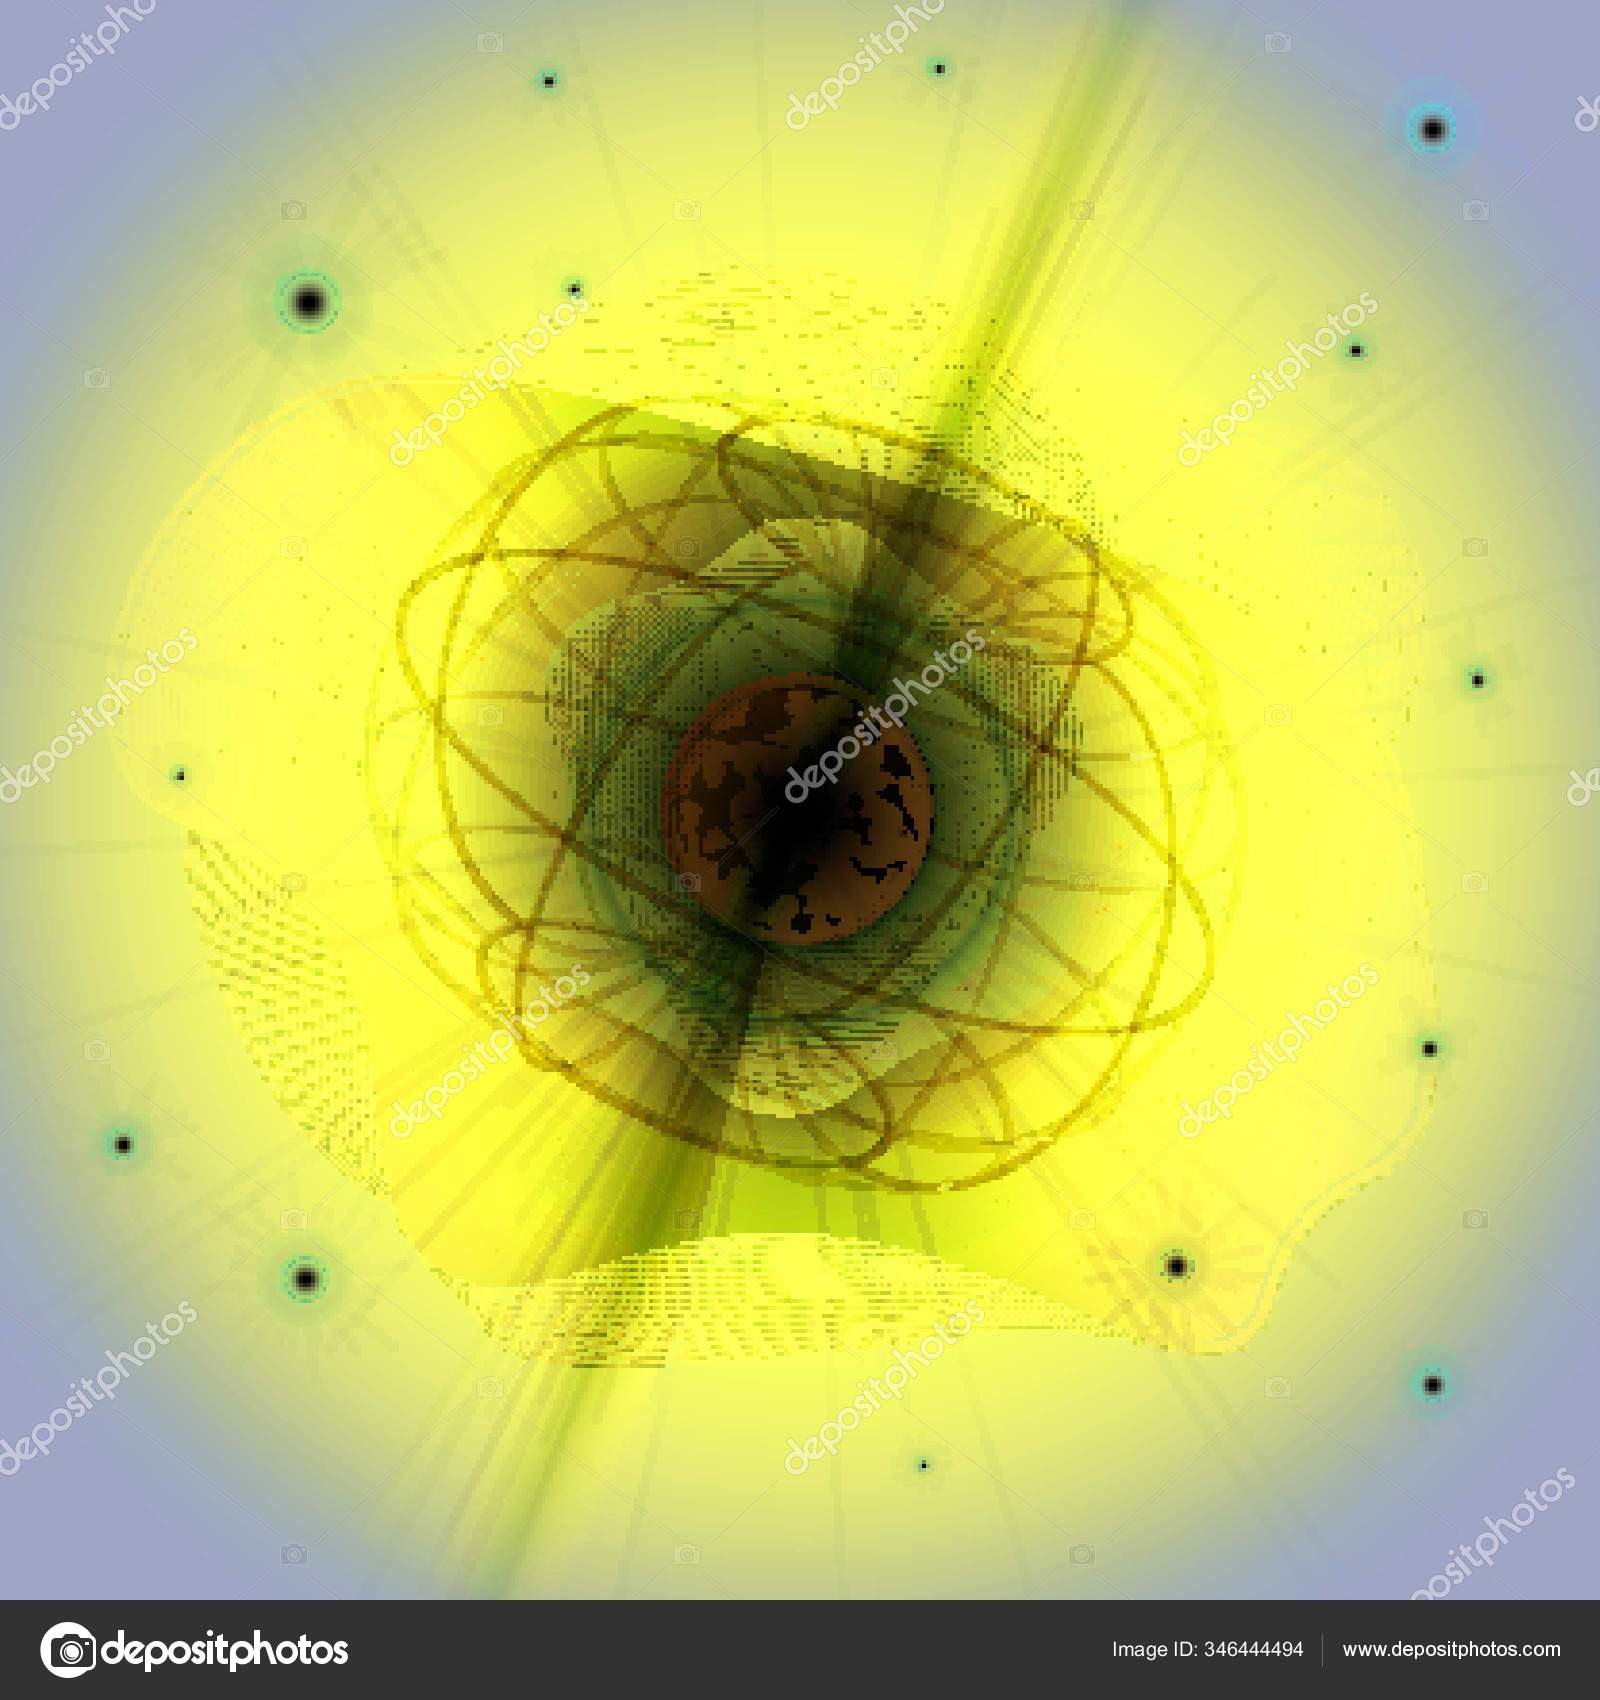 Pulsar star magnetar neutron with radiation Vector Image